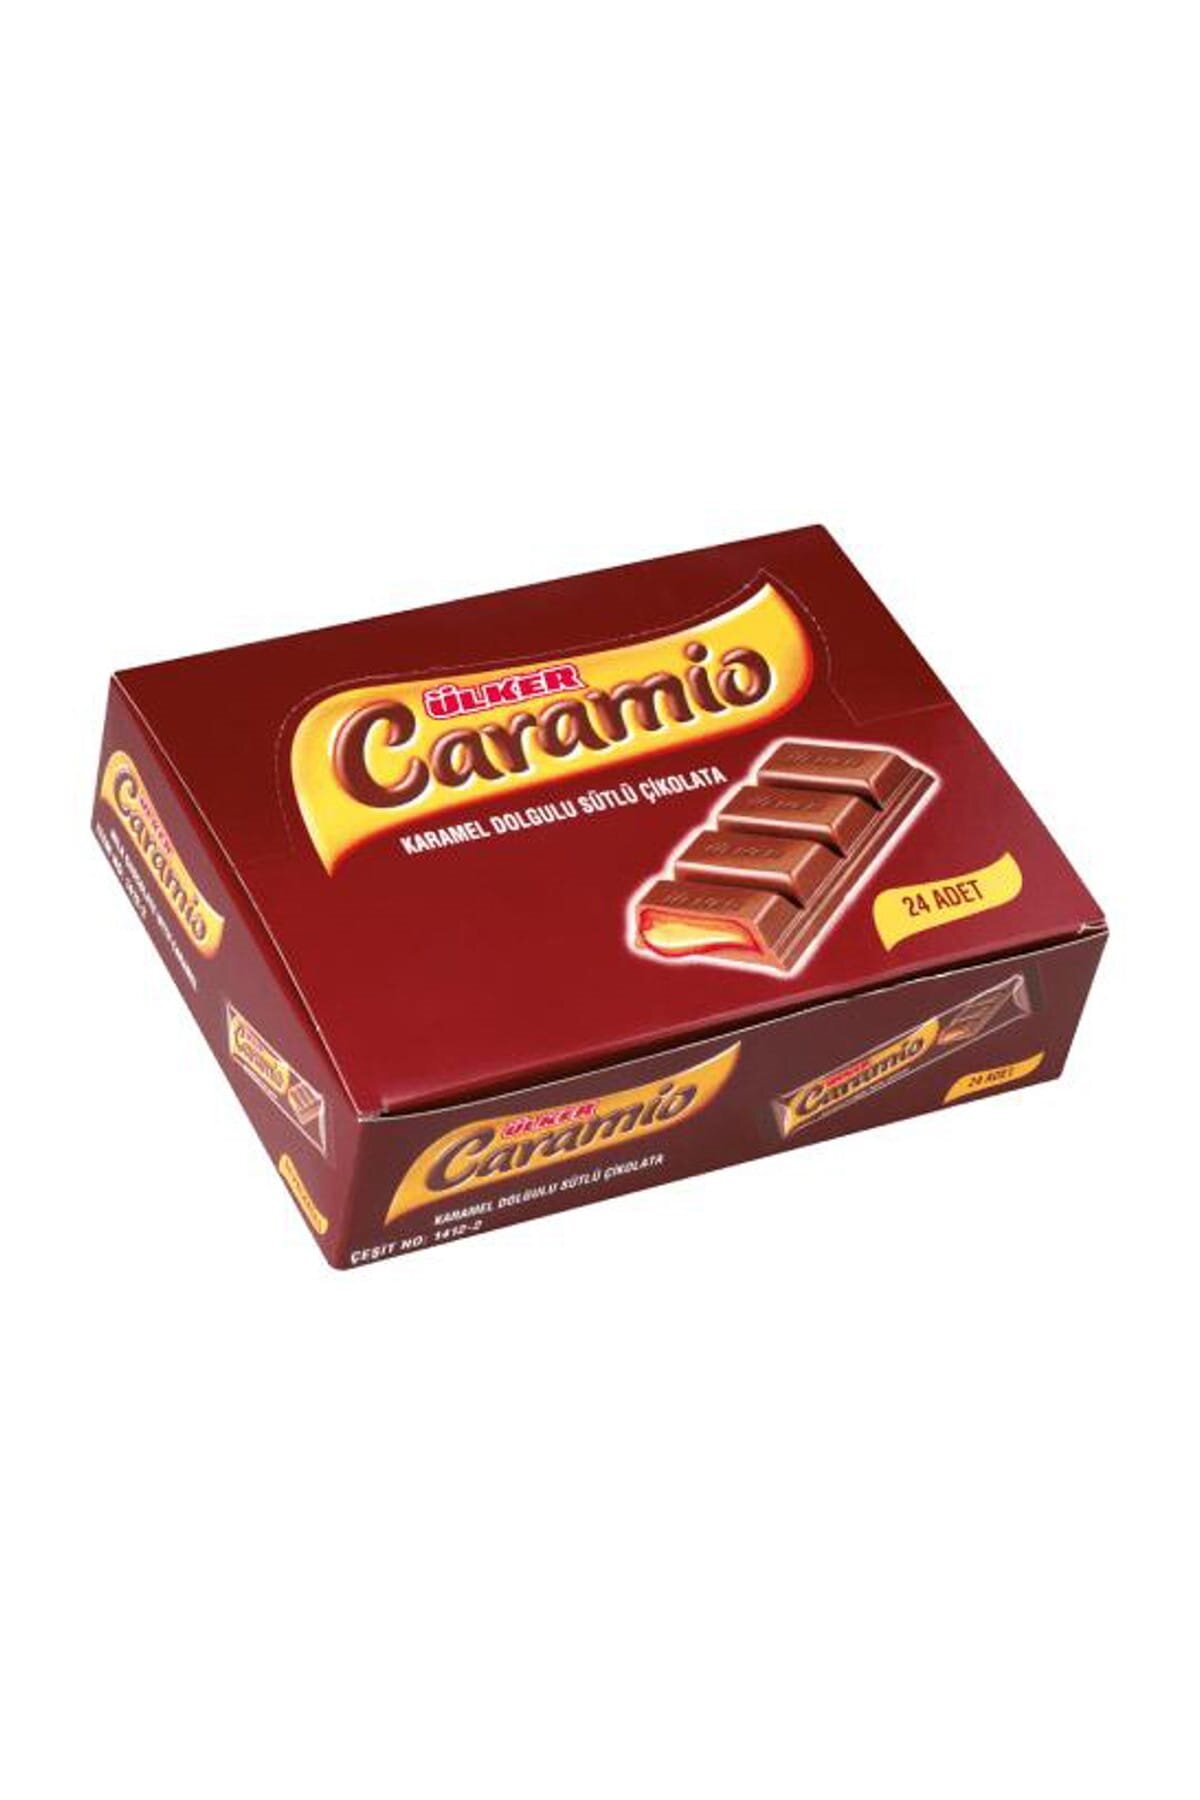 resm Ülker Çikolata Caramio 7 g 24'lü